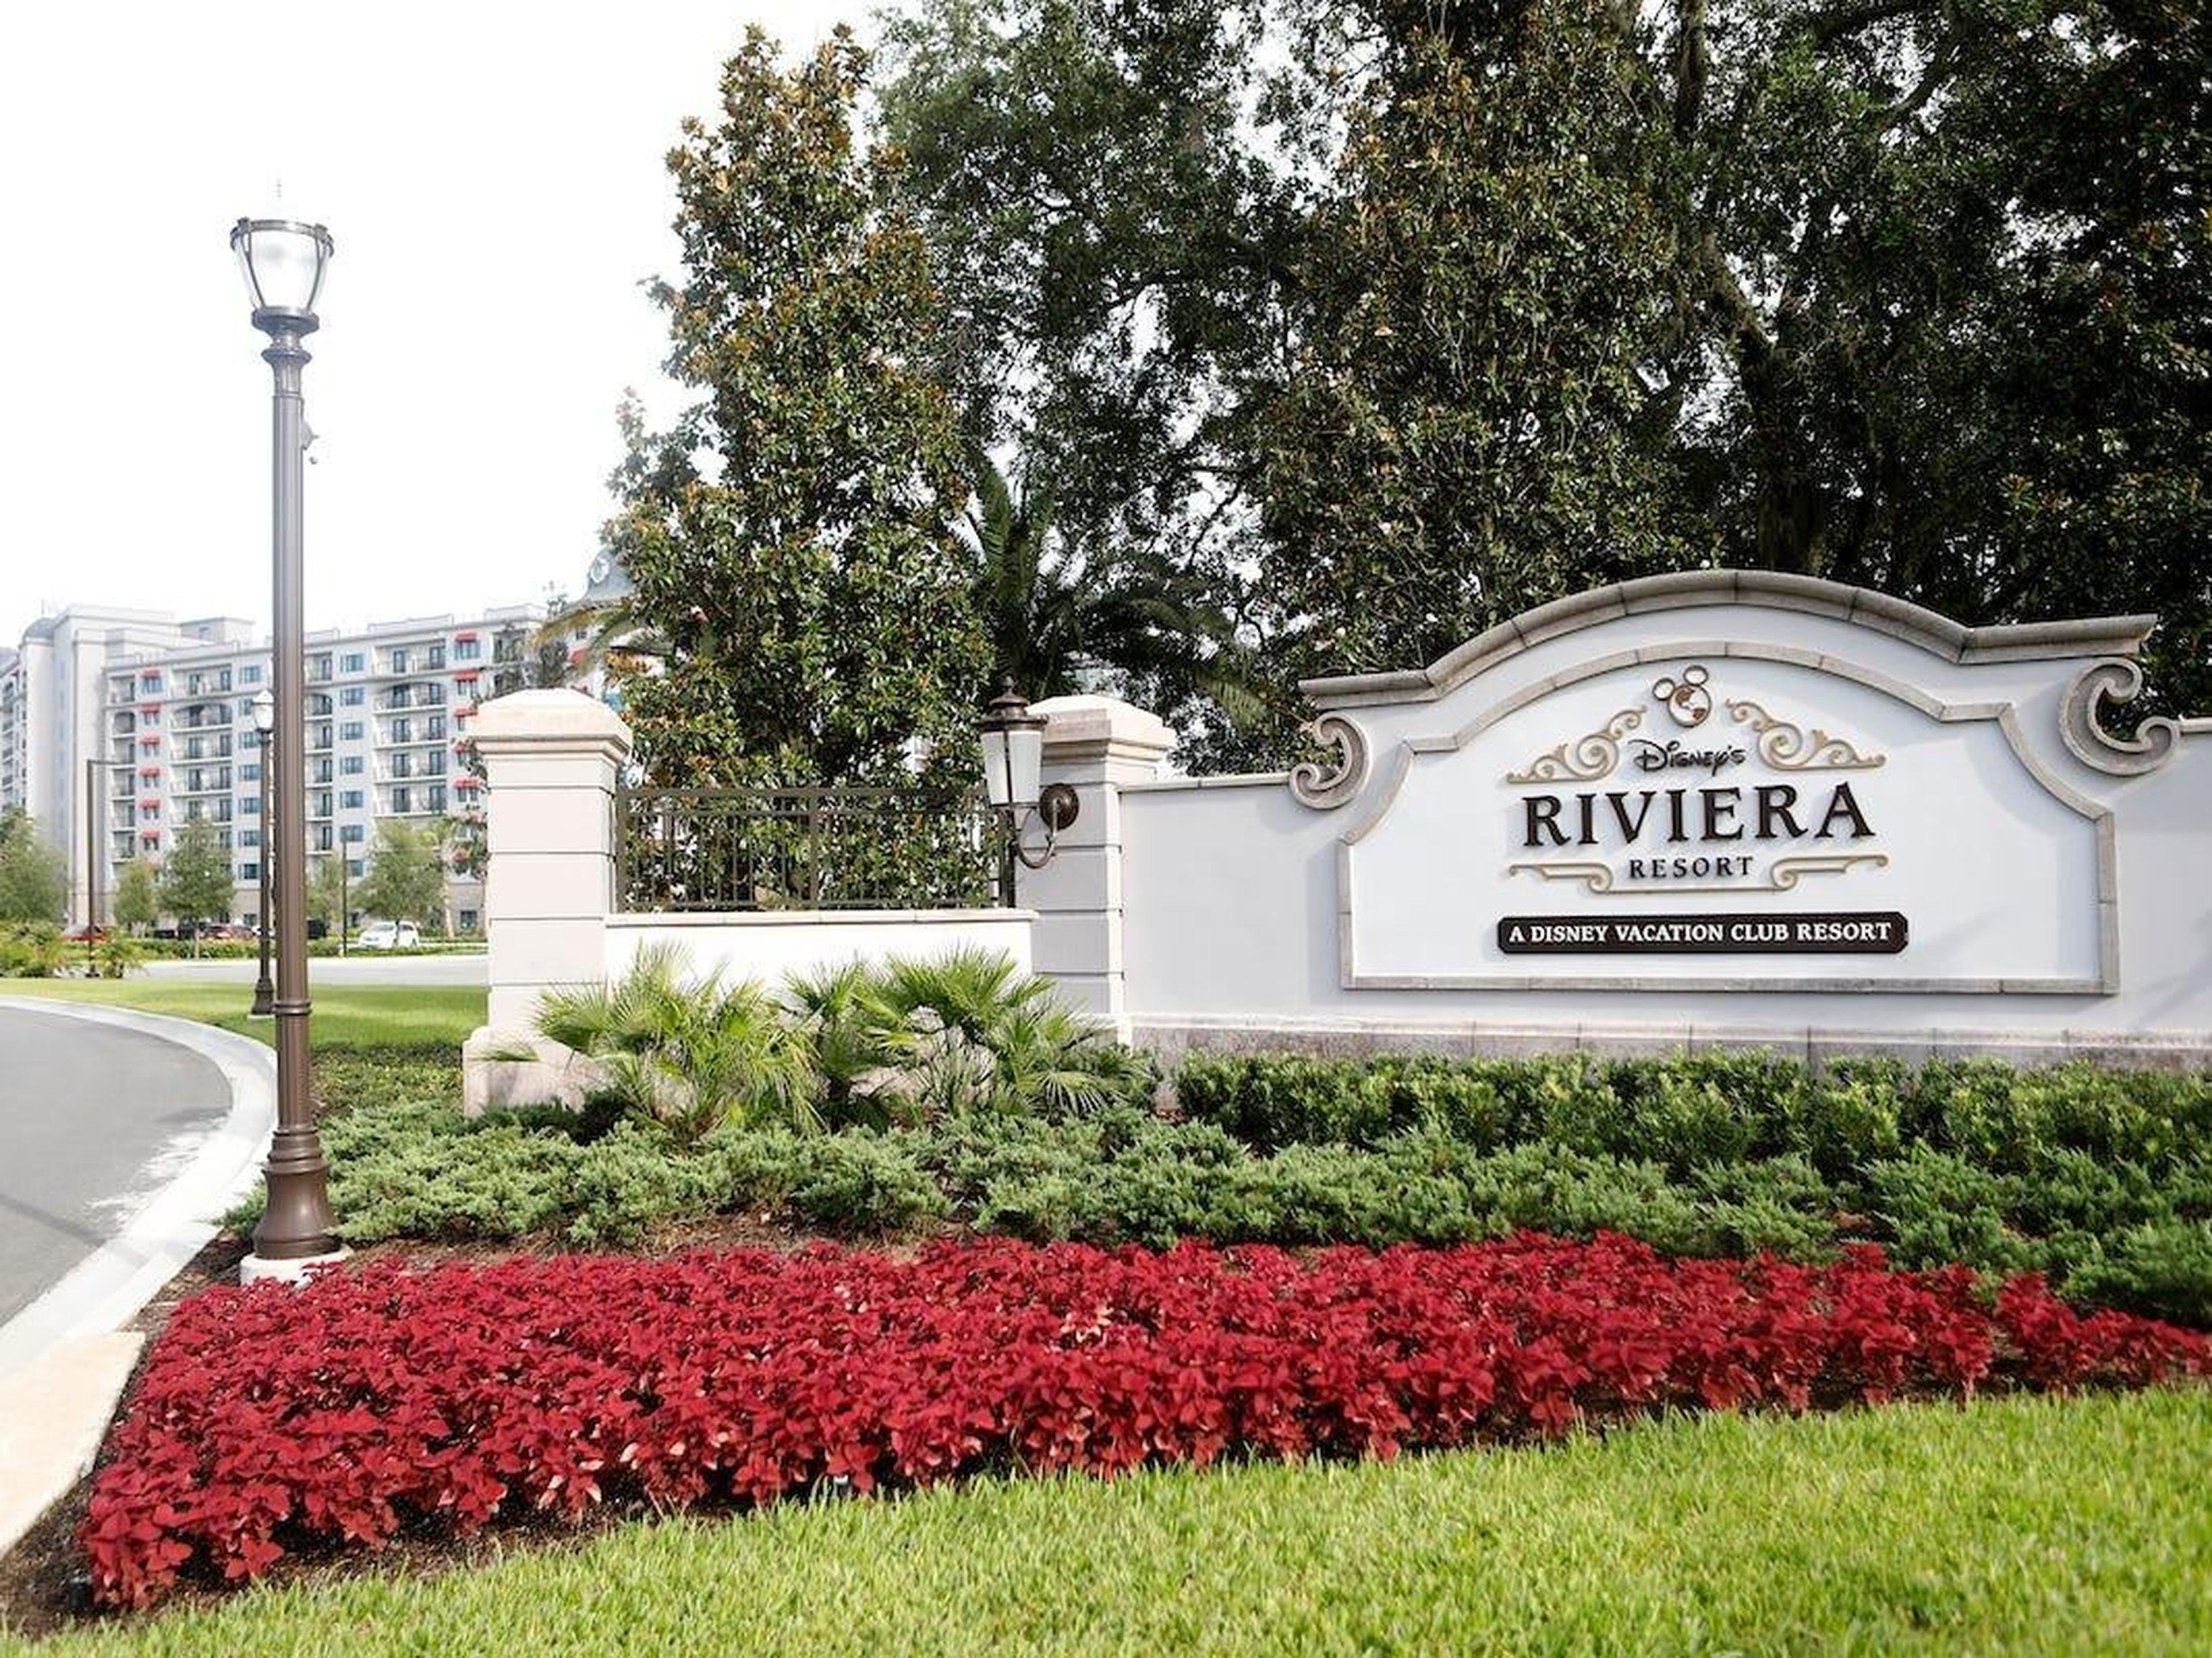 Riviera Resort de Walt Disney World.